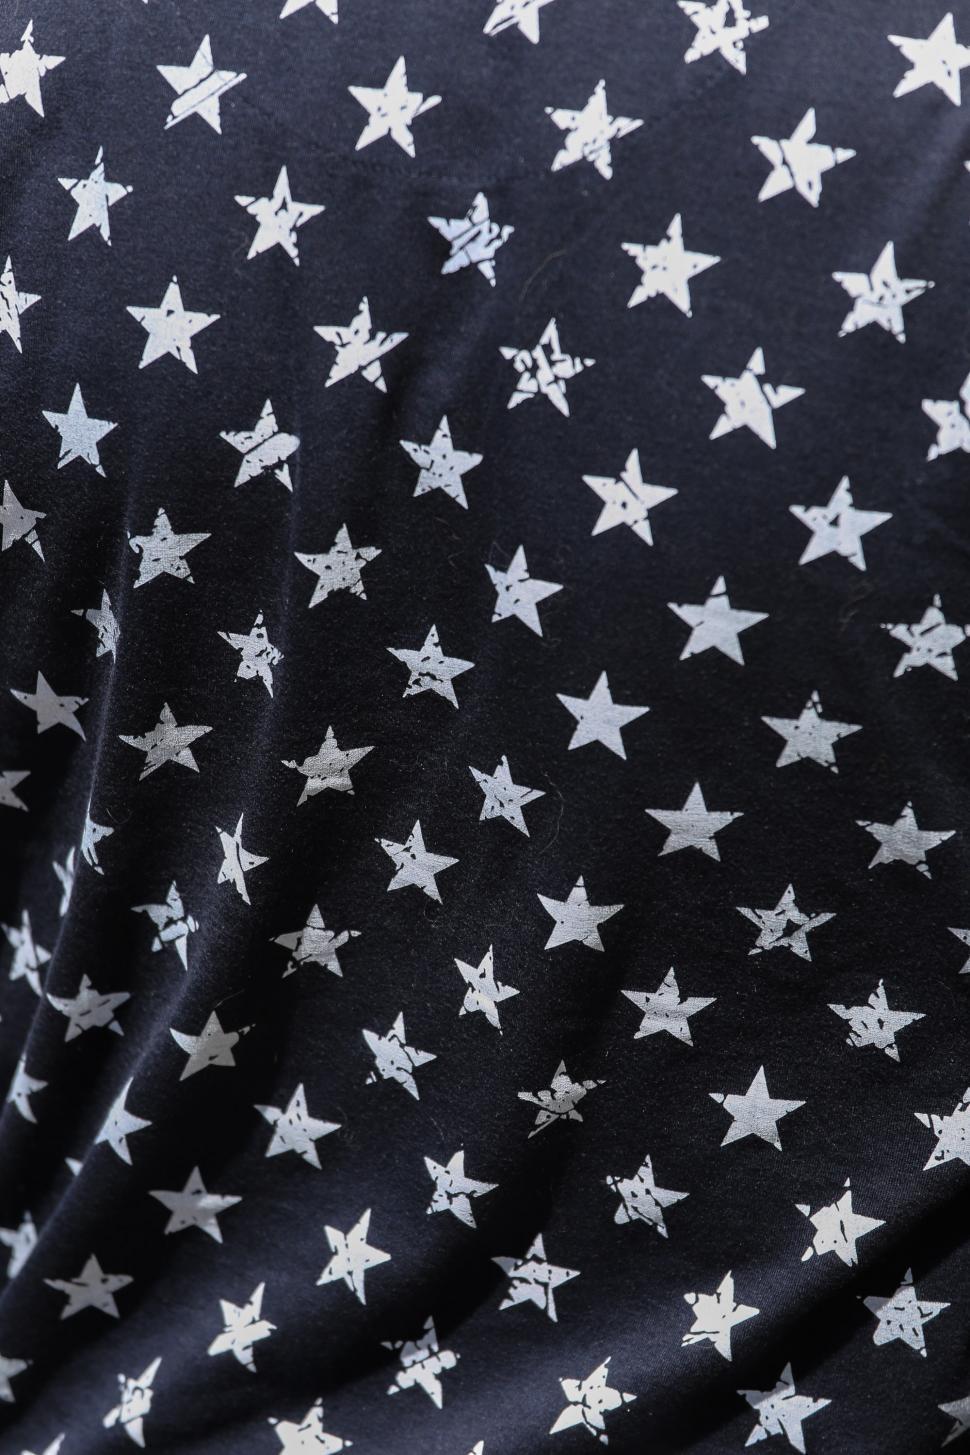 Free Image of Star pattern fabric 